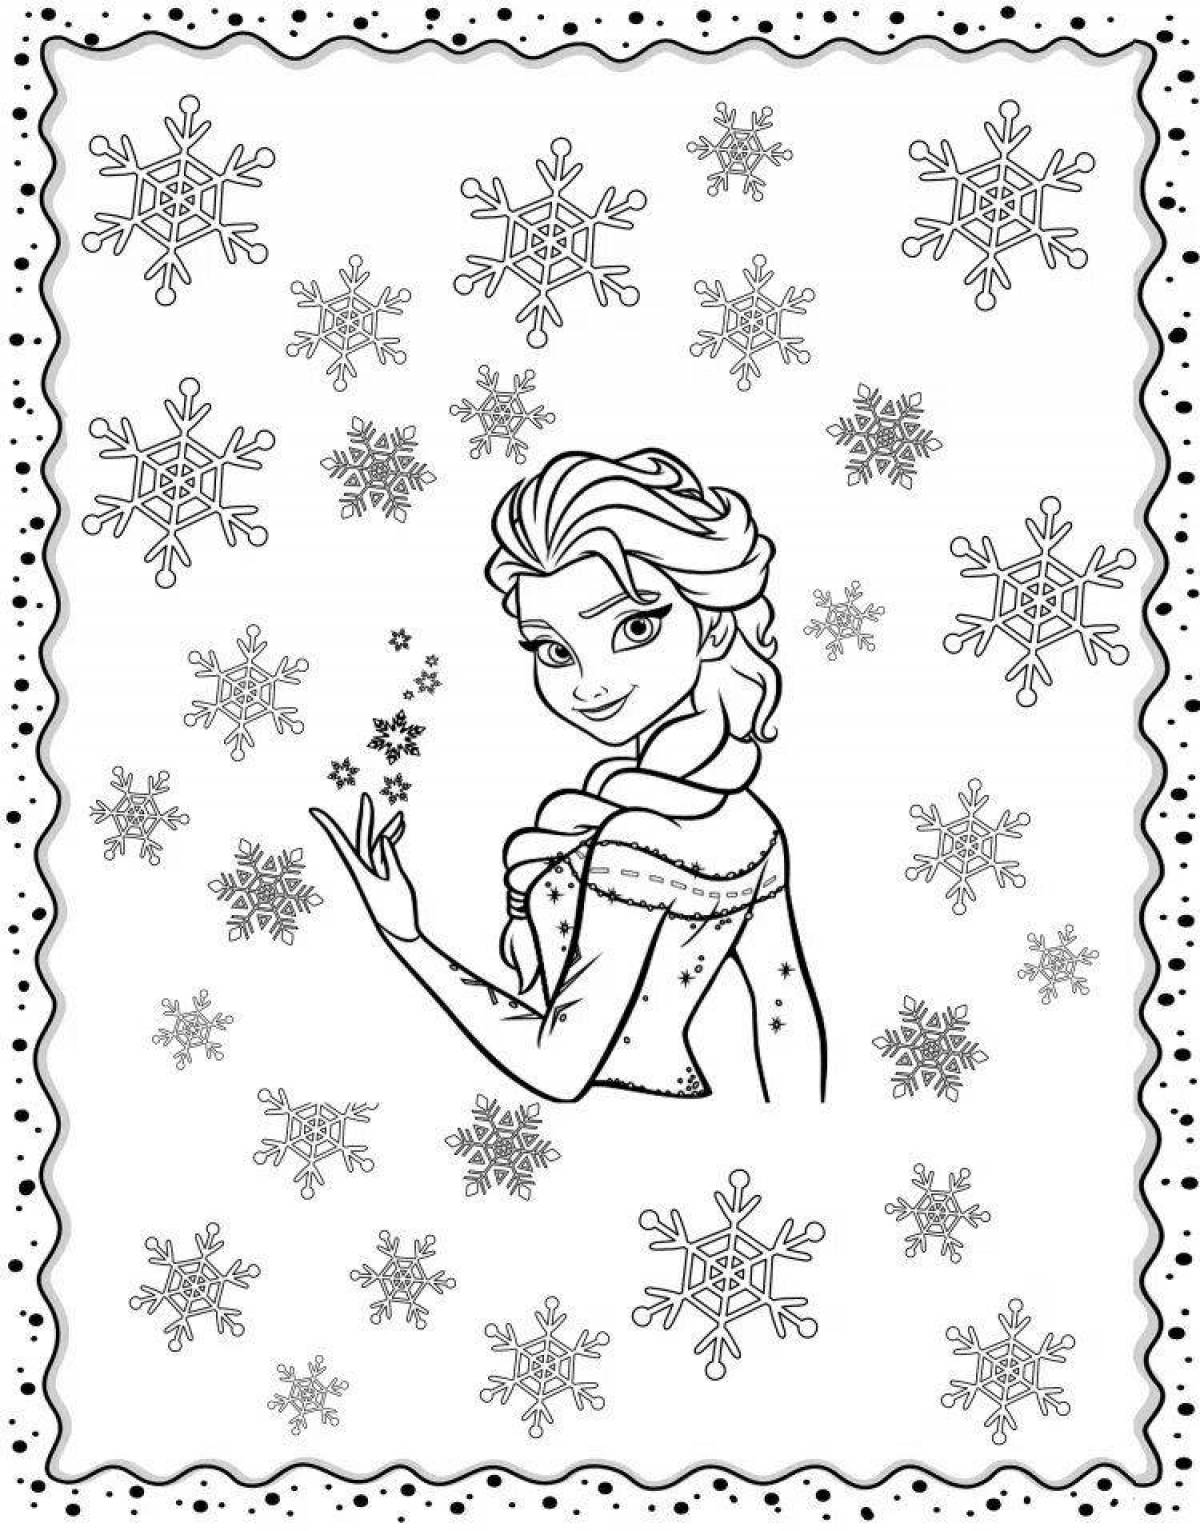 Fun winter coloring for girls